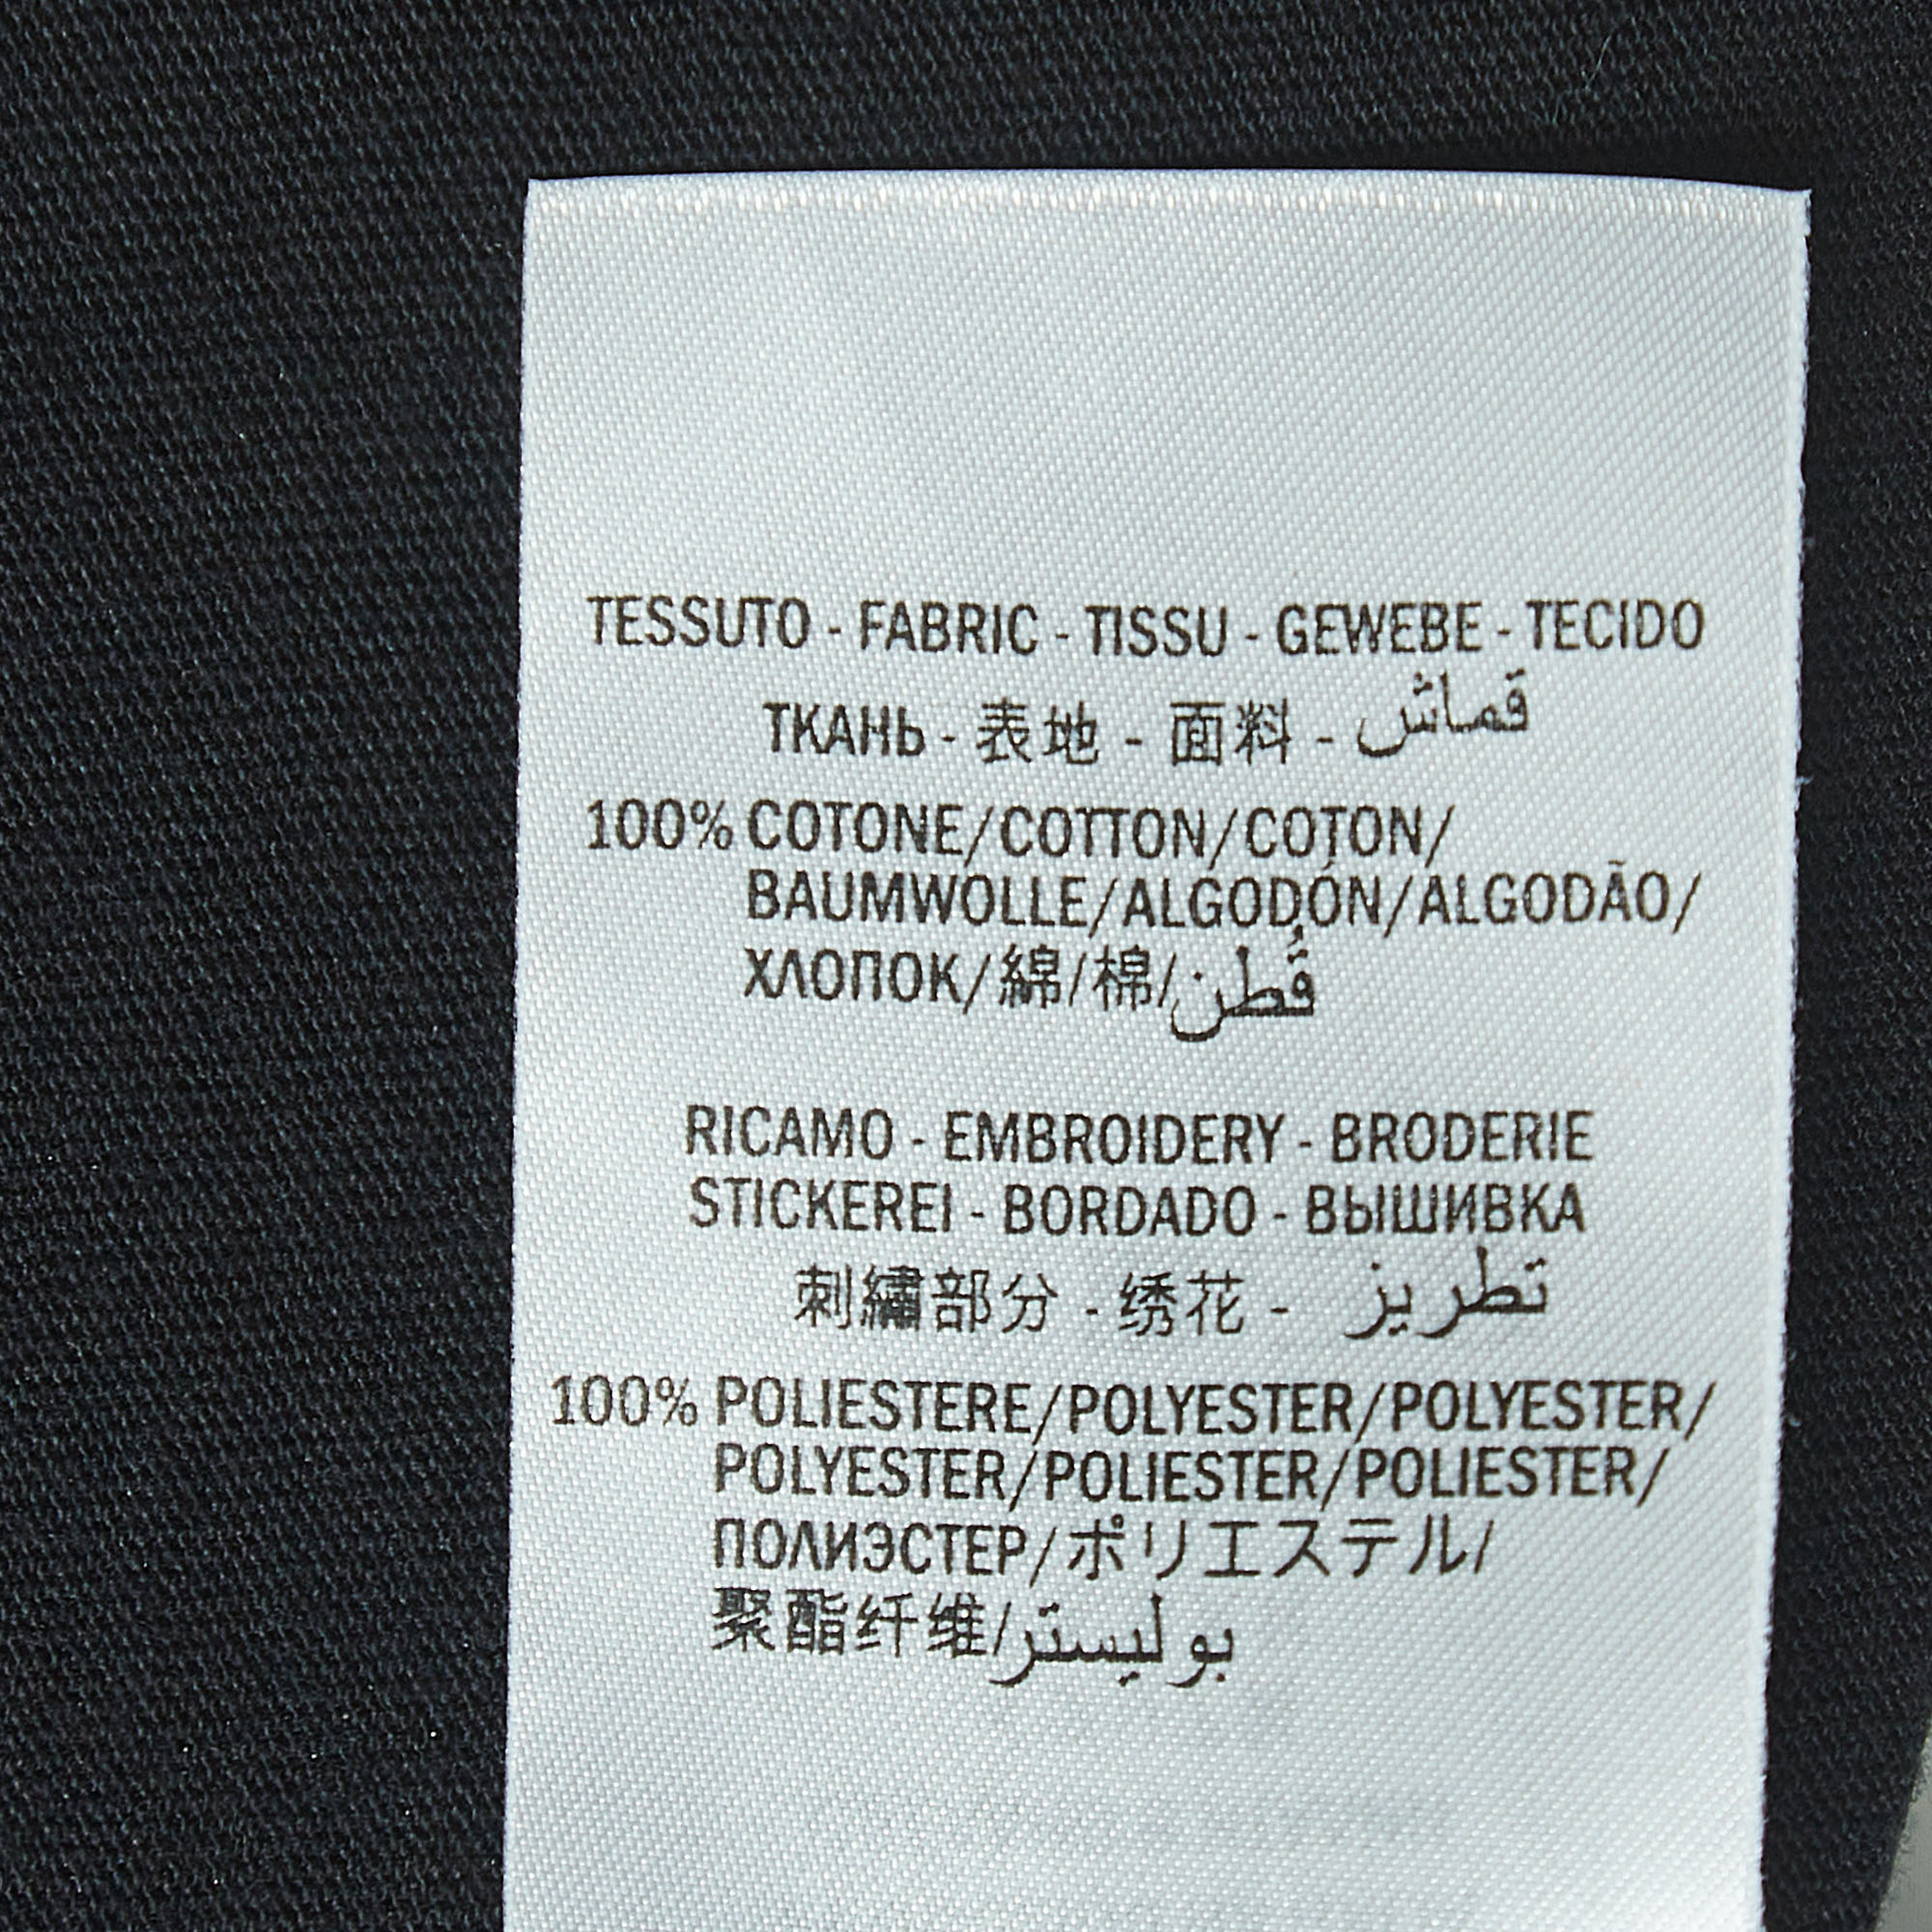 Gucci Black Embellished Bugs Bunny Cotton T-Shirt M